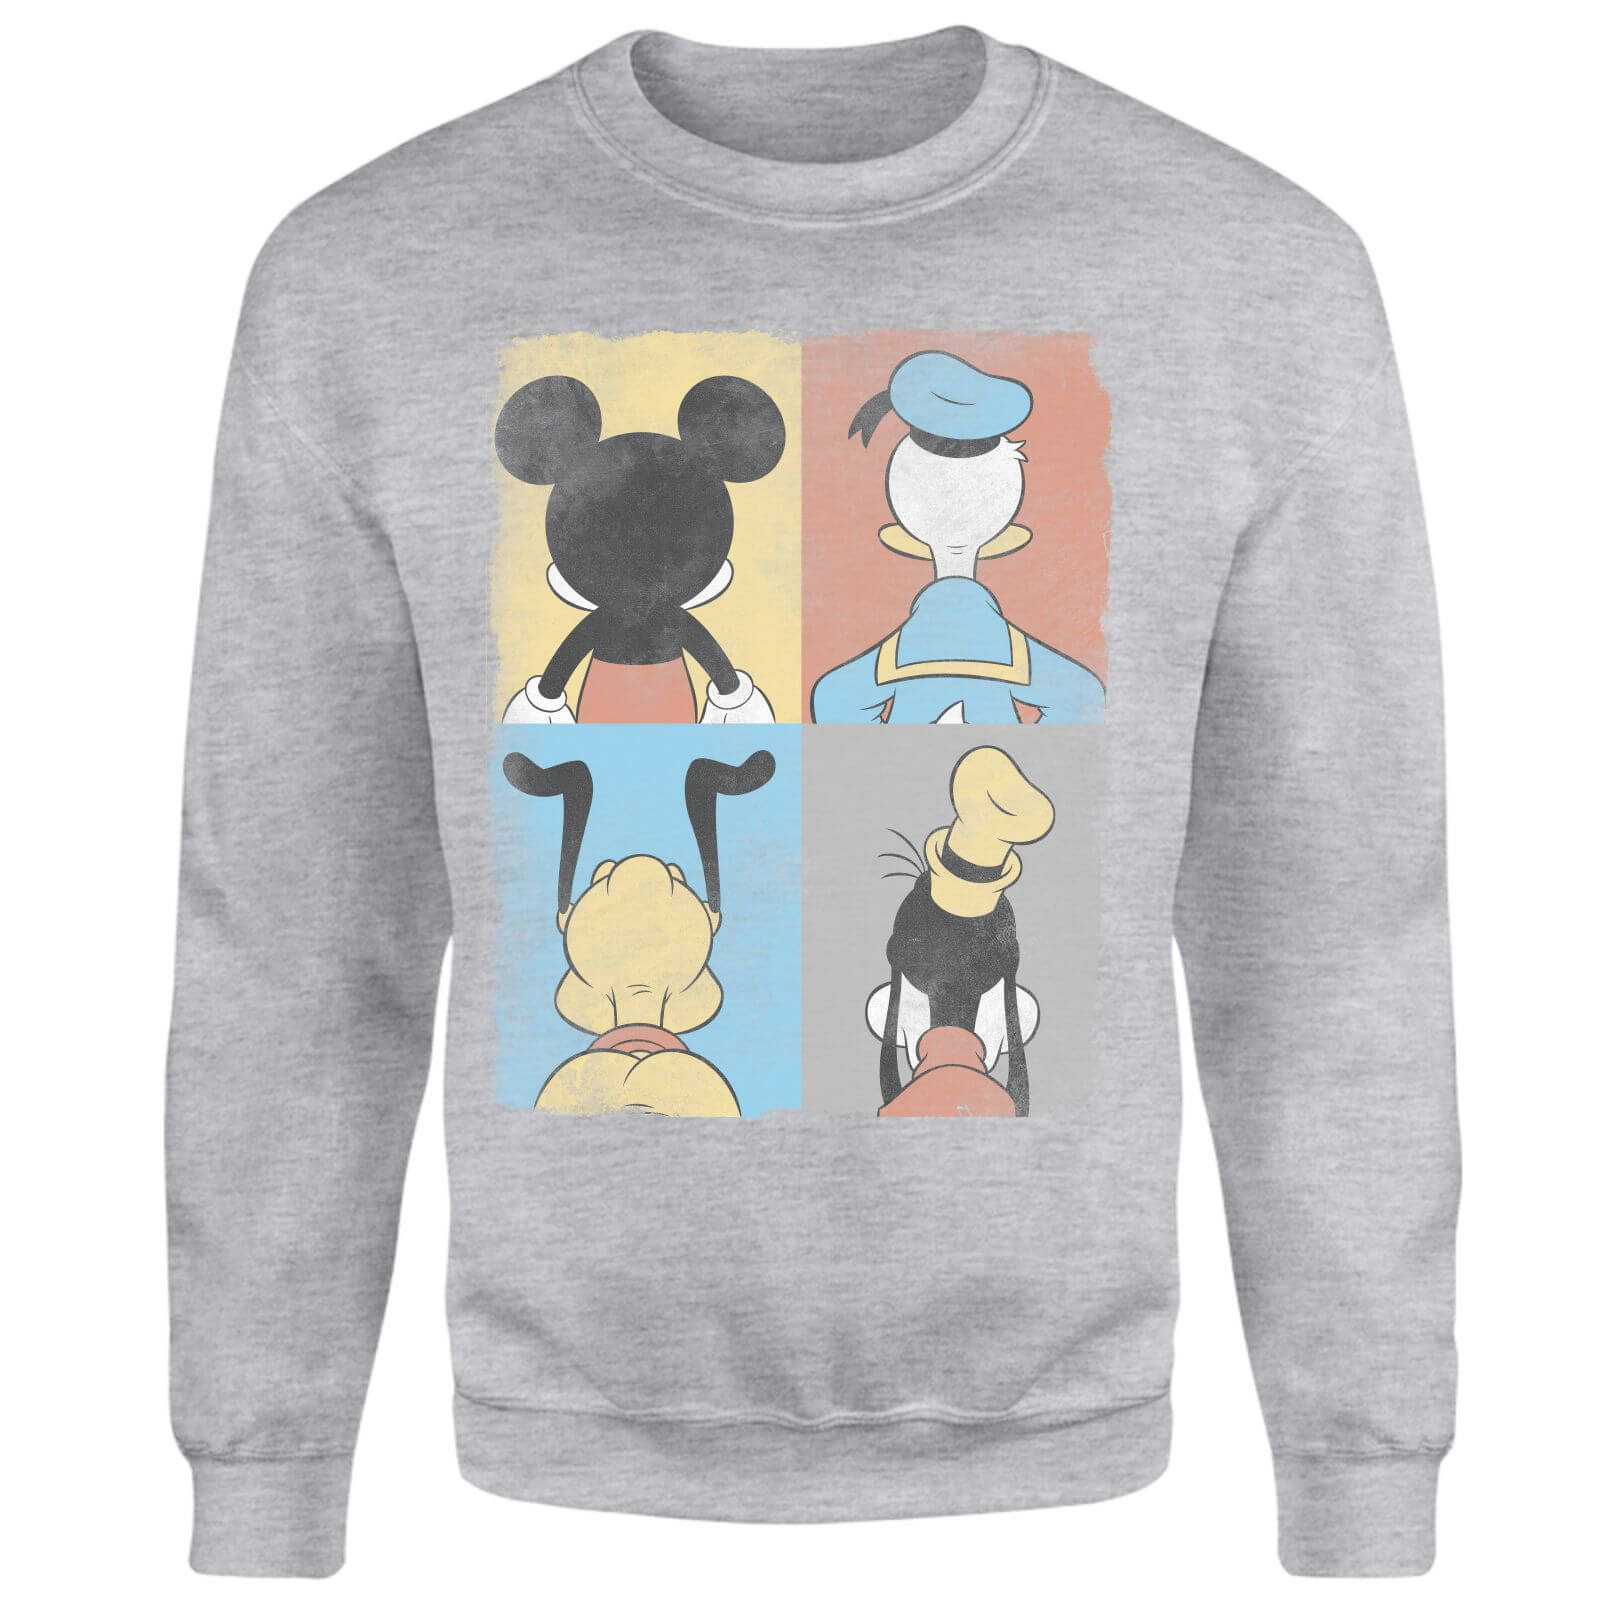 Donald Duck Mickey Mouse Pluto Goofy Tiles Sweatshirt - Grey - XS - Grey